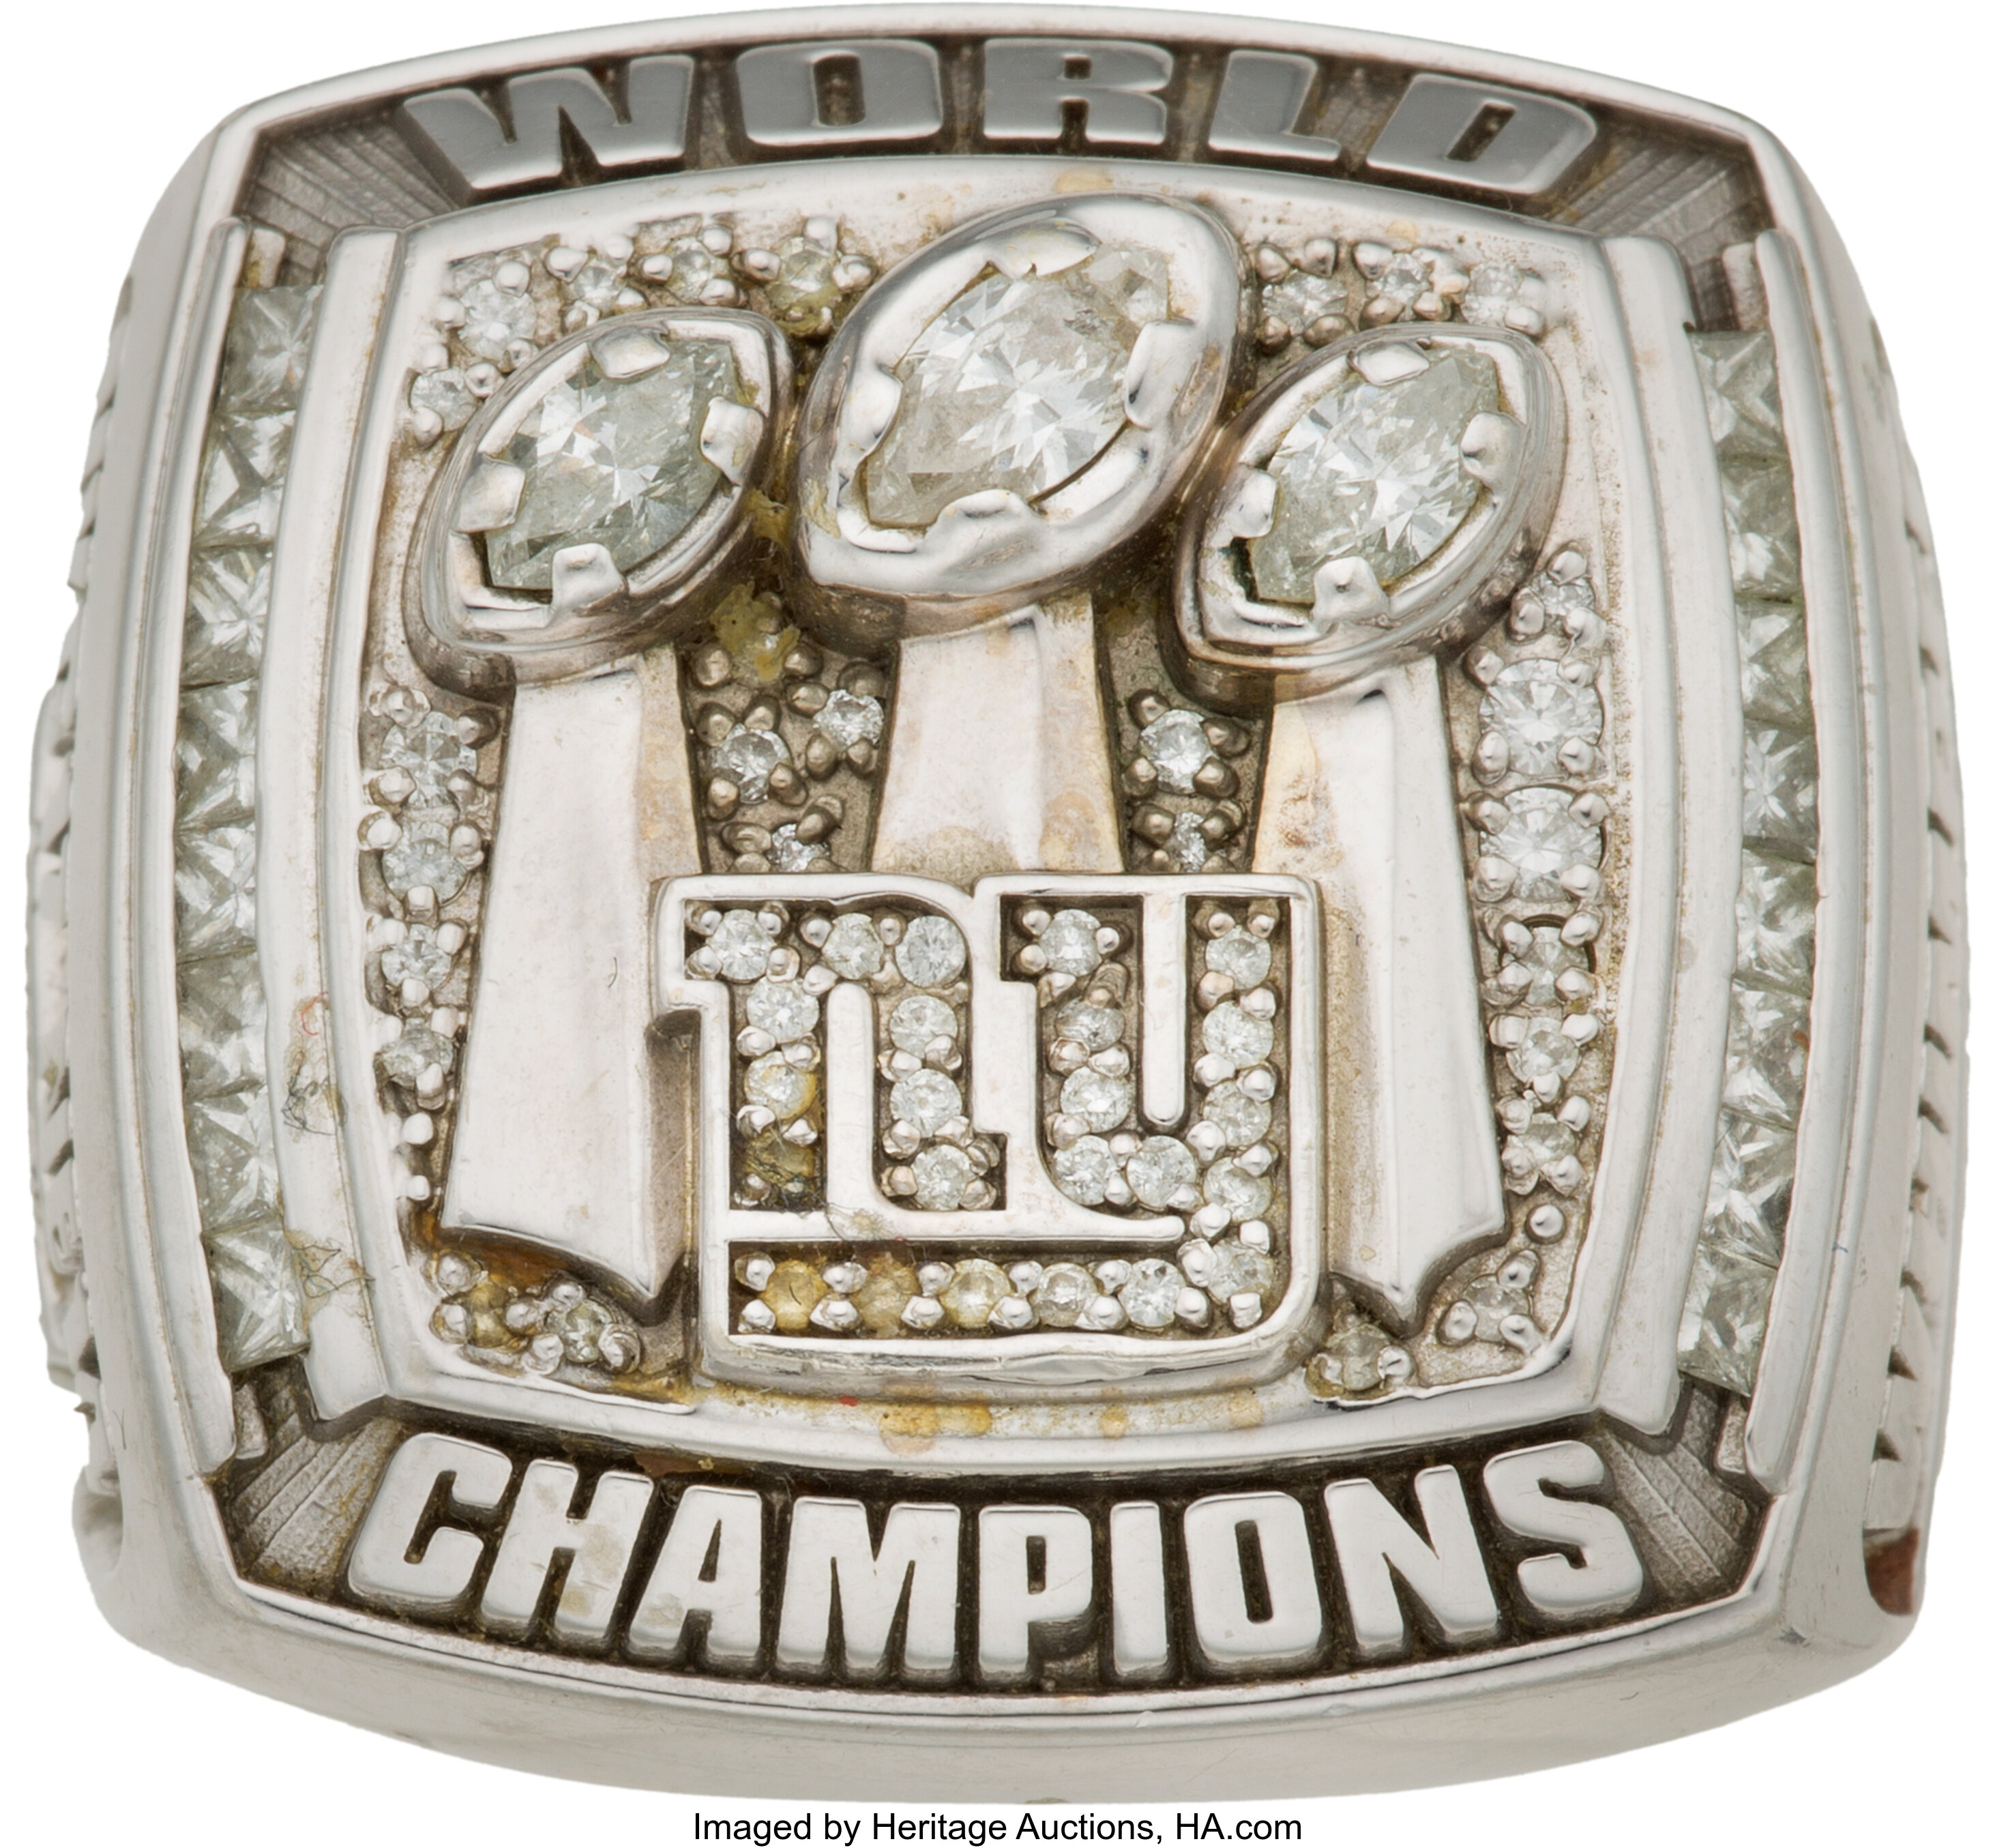 2007 New York Giants Super Bowl XLII Championship Ring Presented